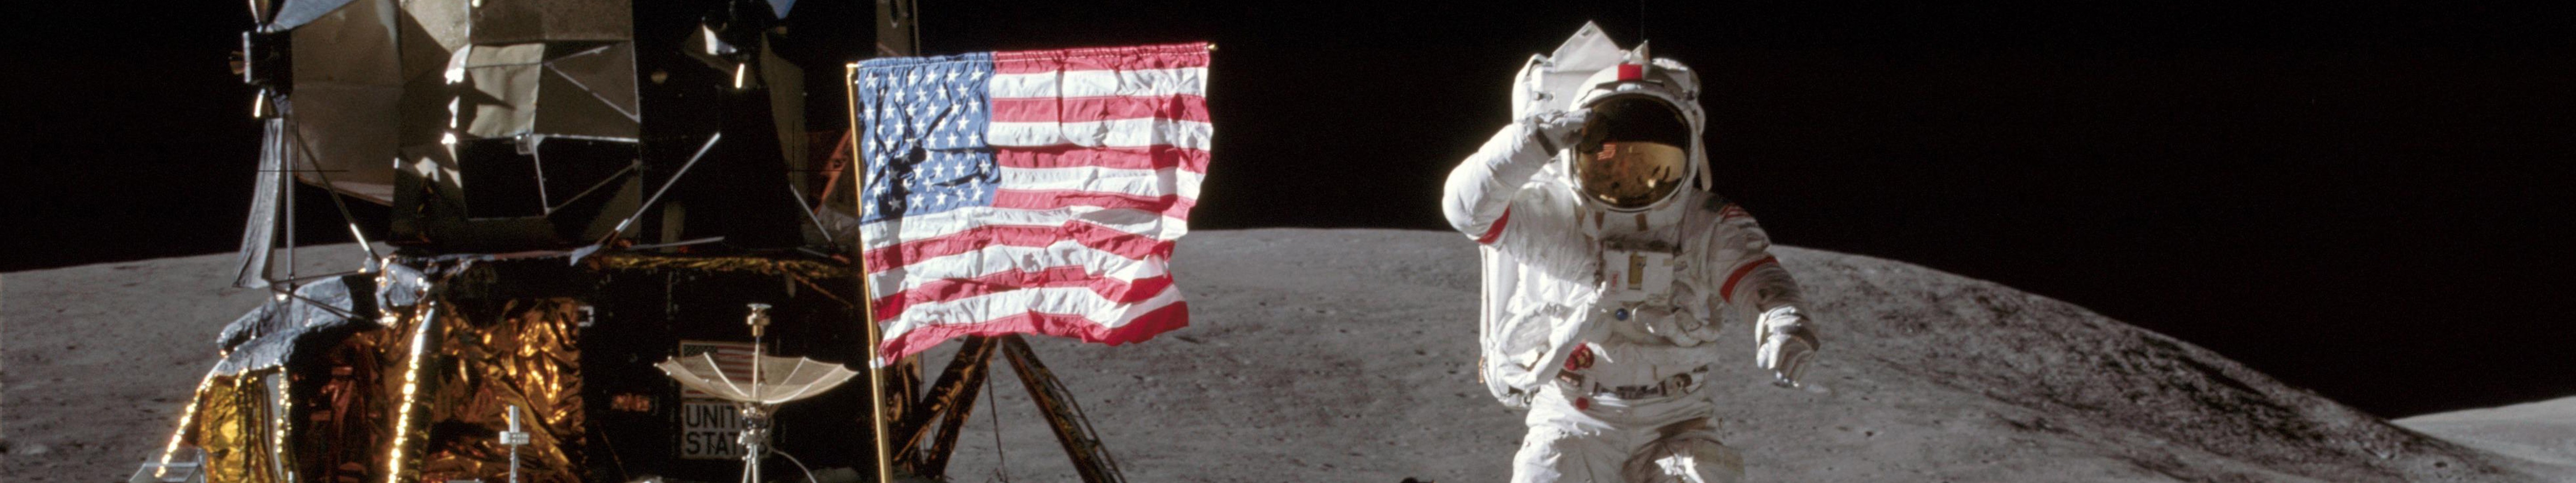 General 5760x1080 flag Moon space astronaut Apollo program NASA American flag